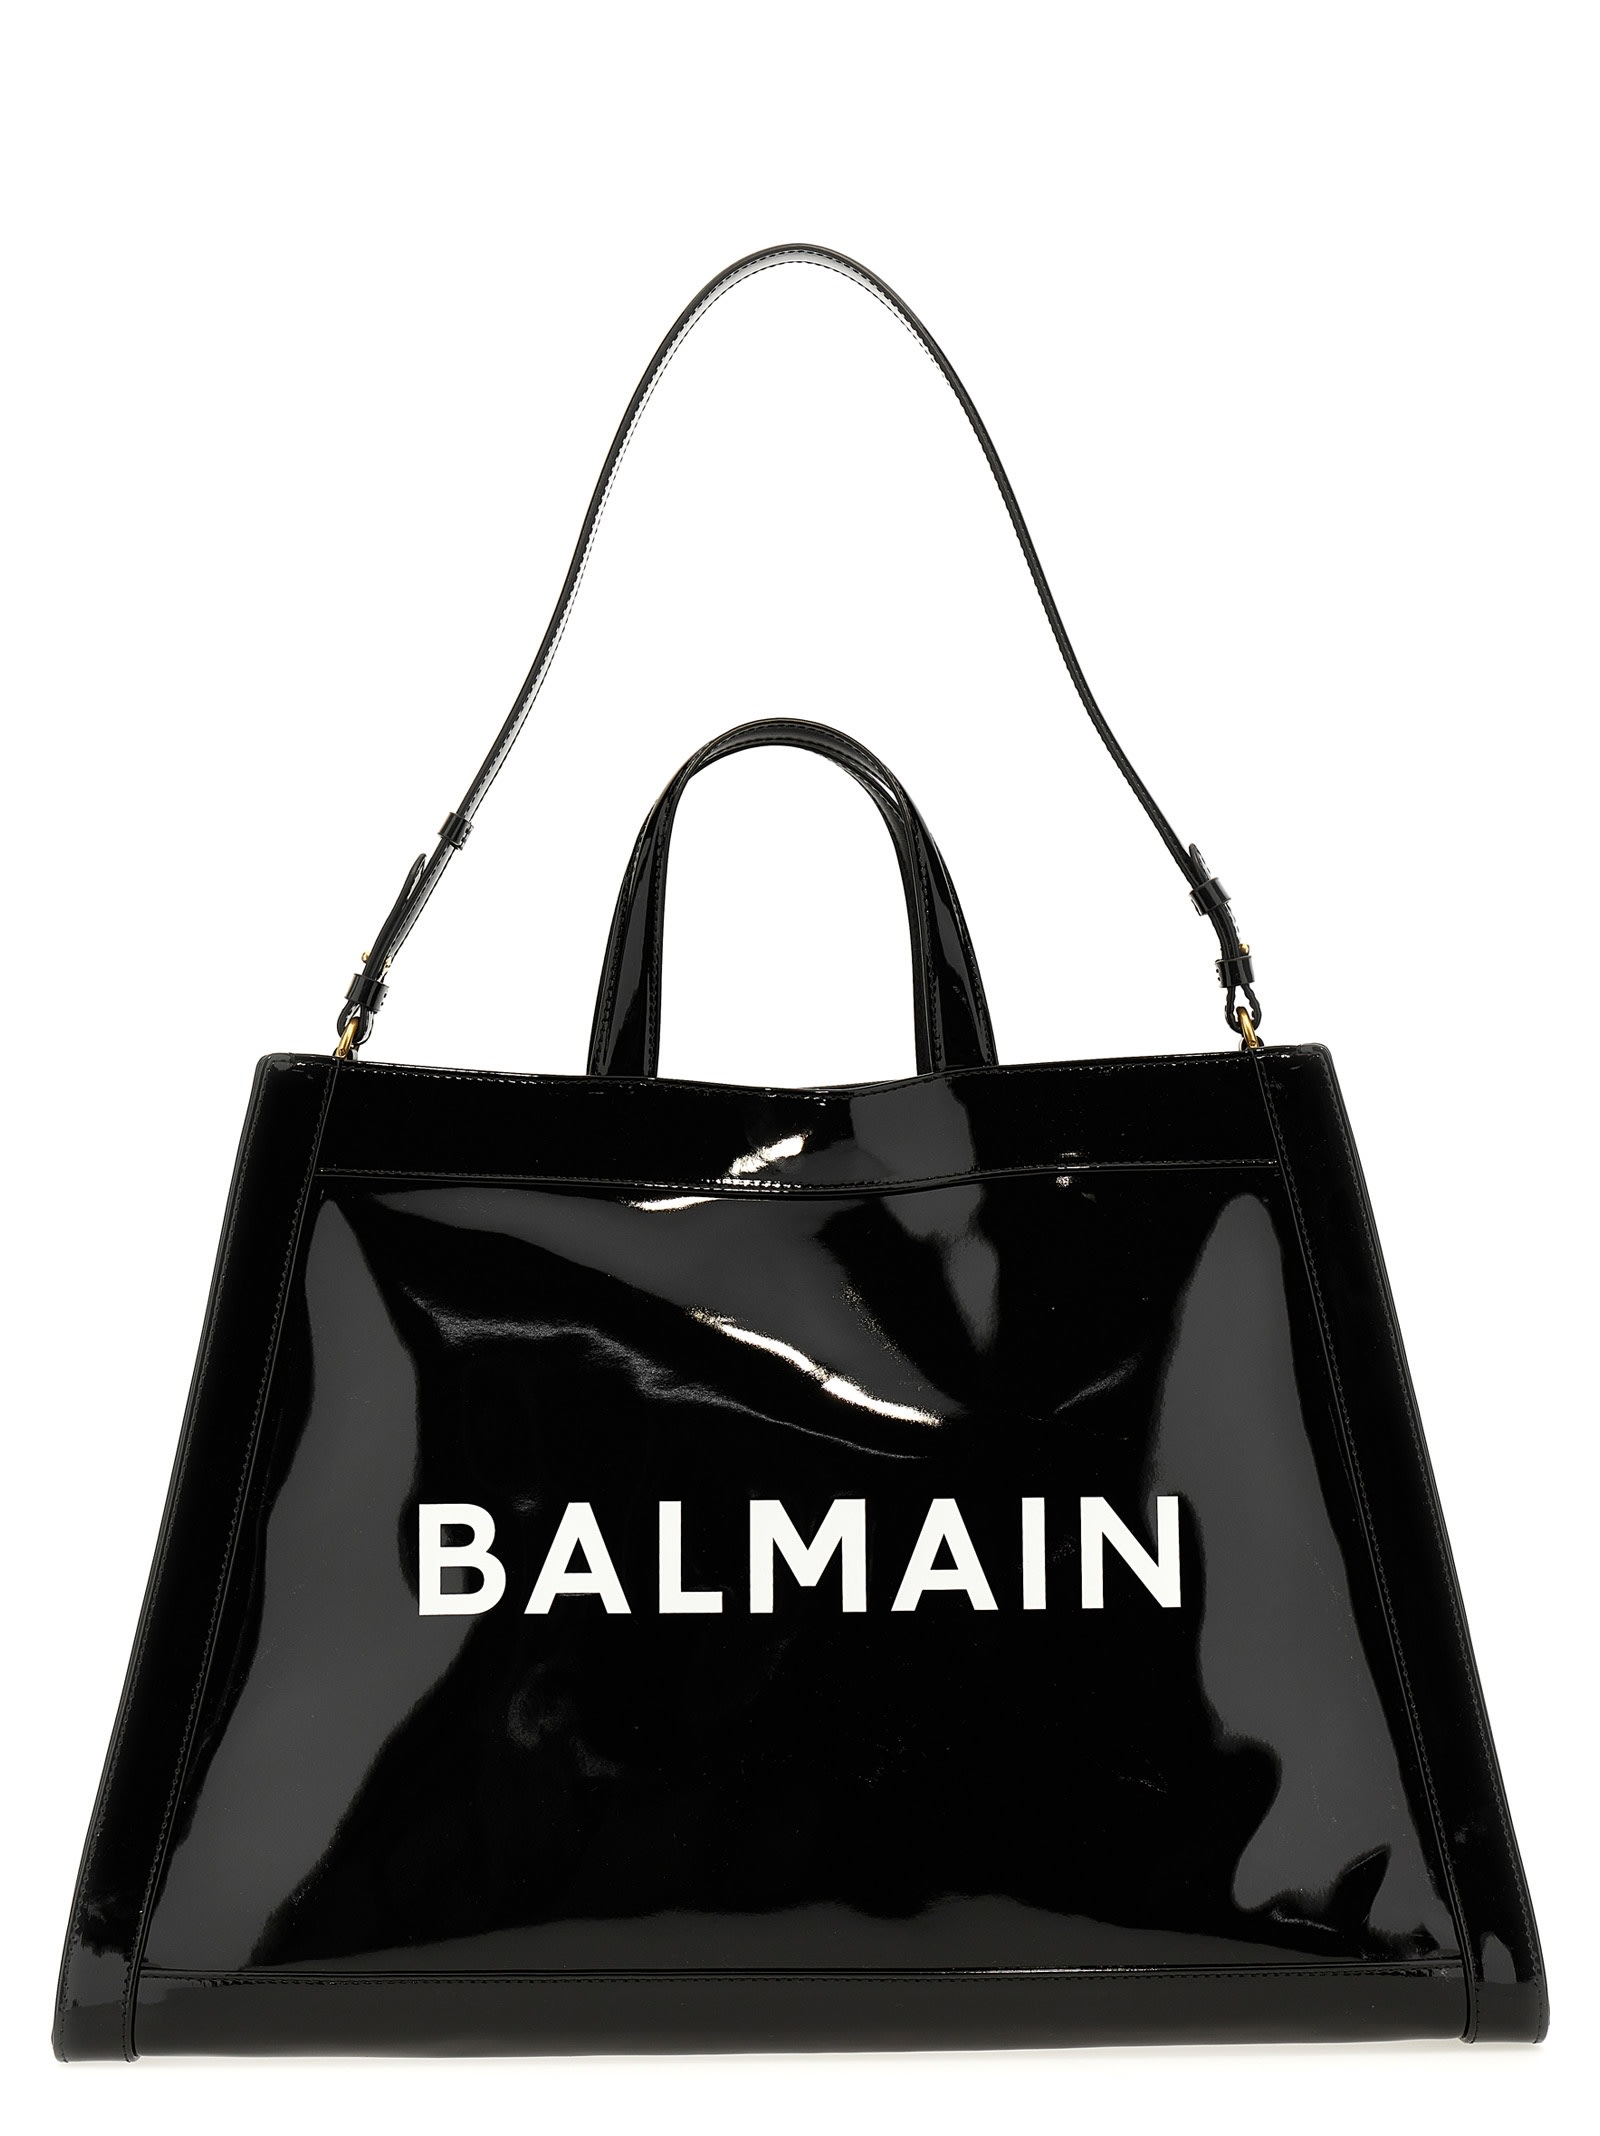 Balmain Oliviers Cabas Shopping Bag In White/black